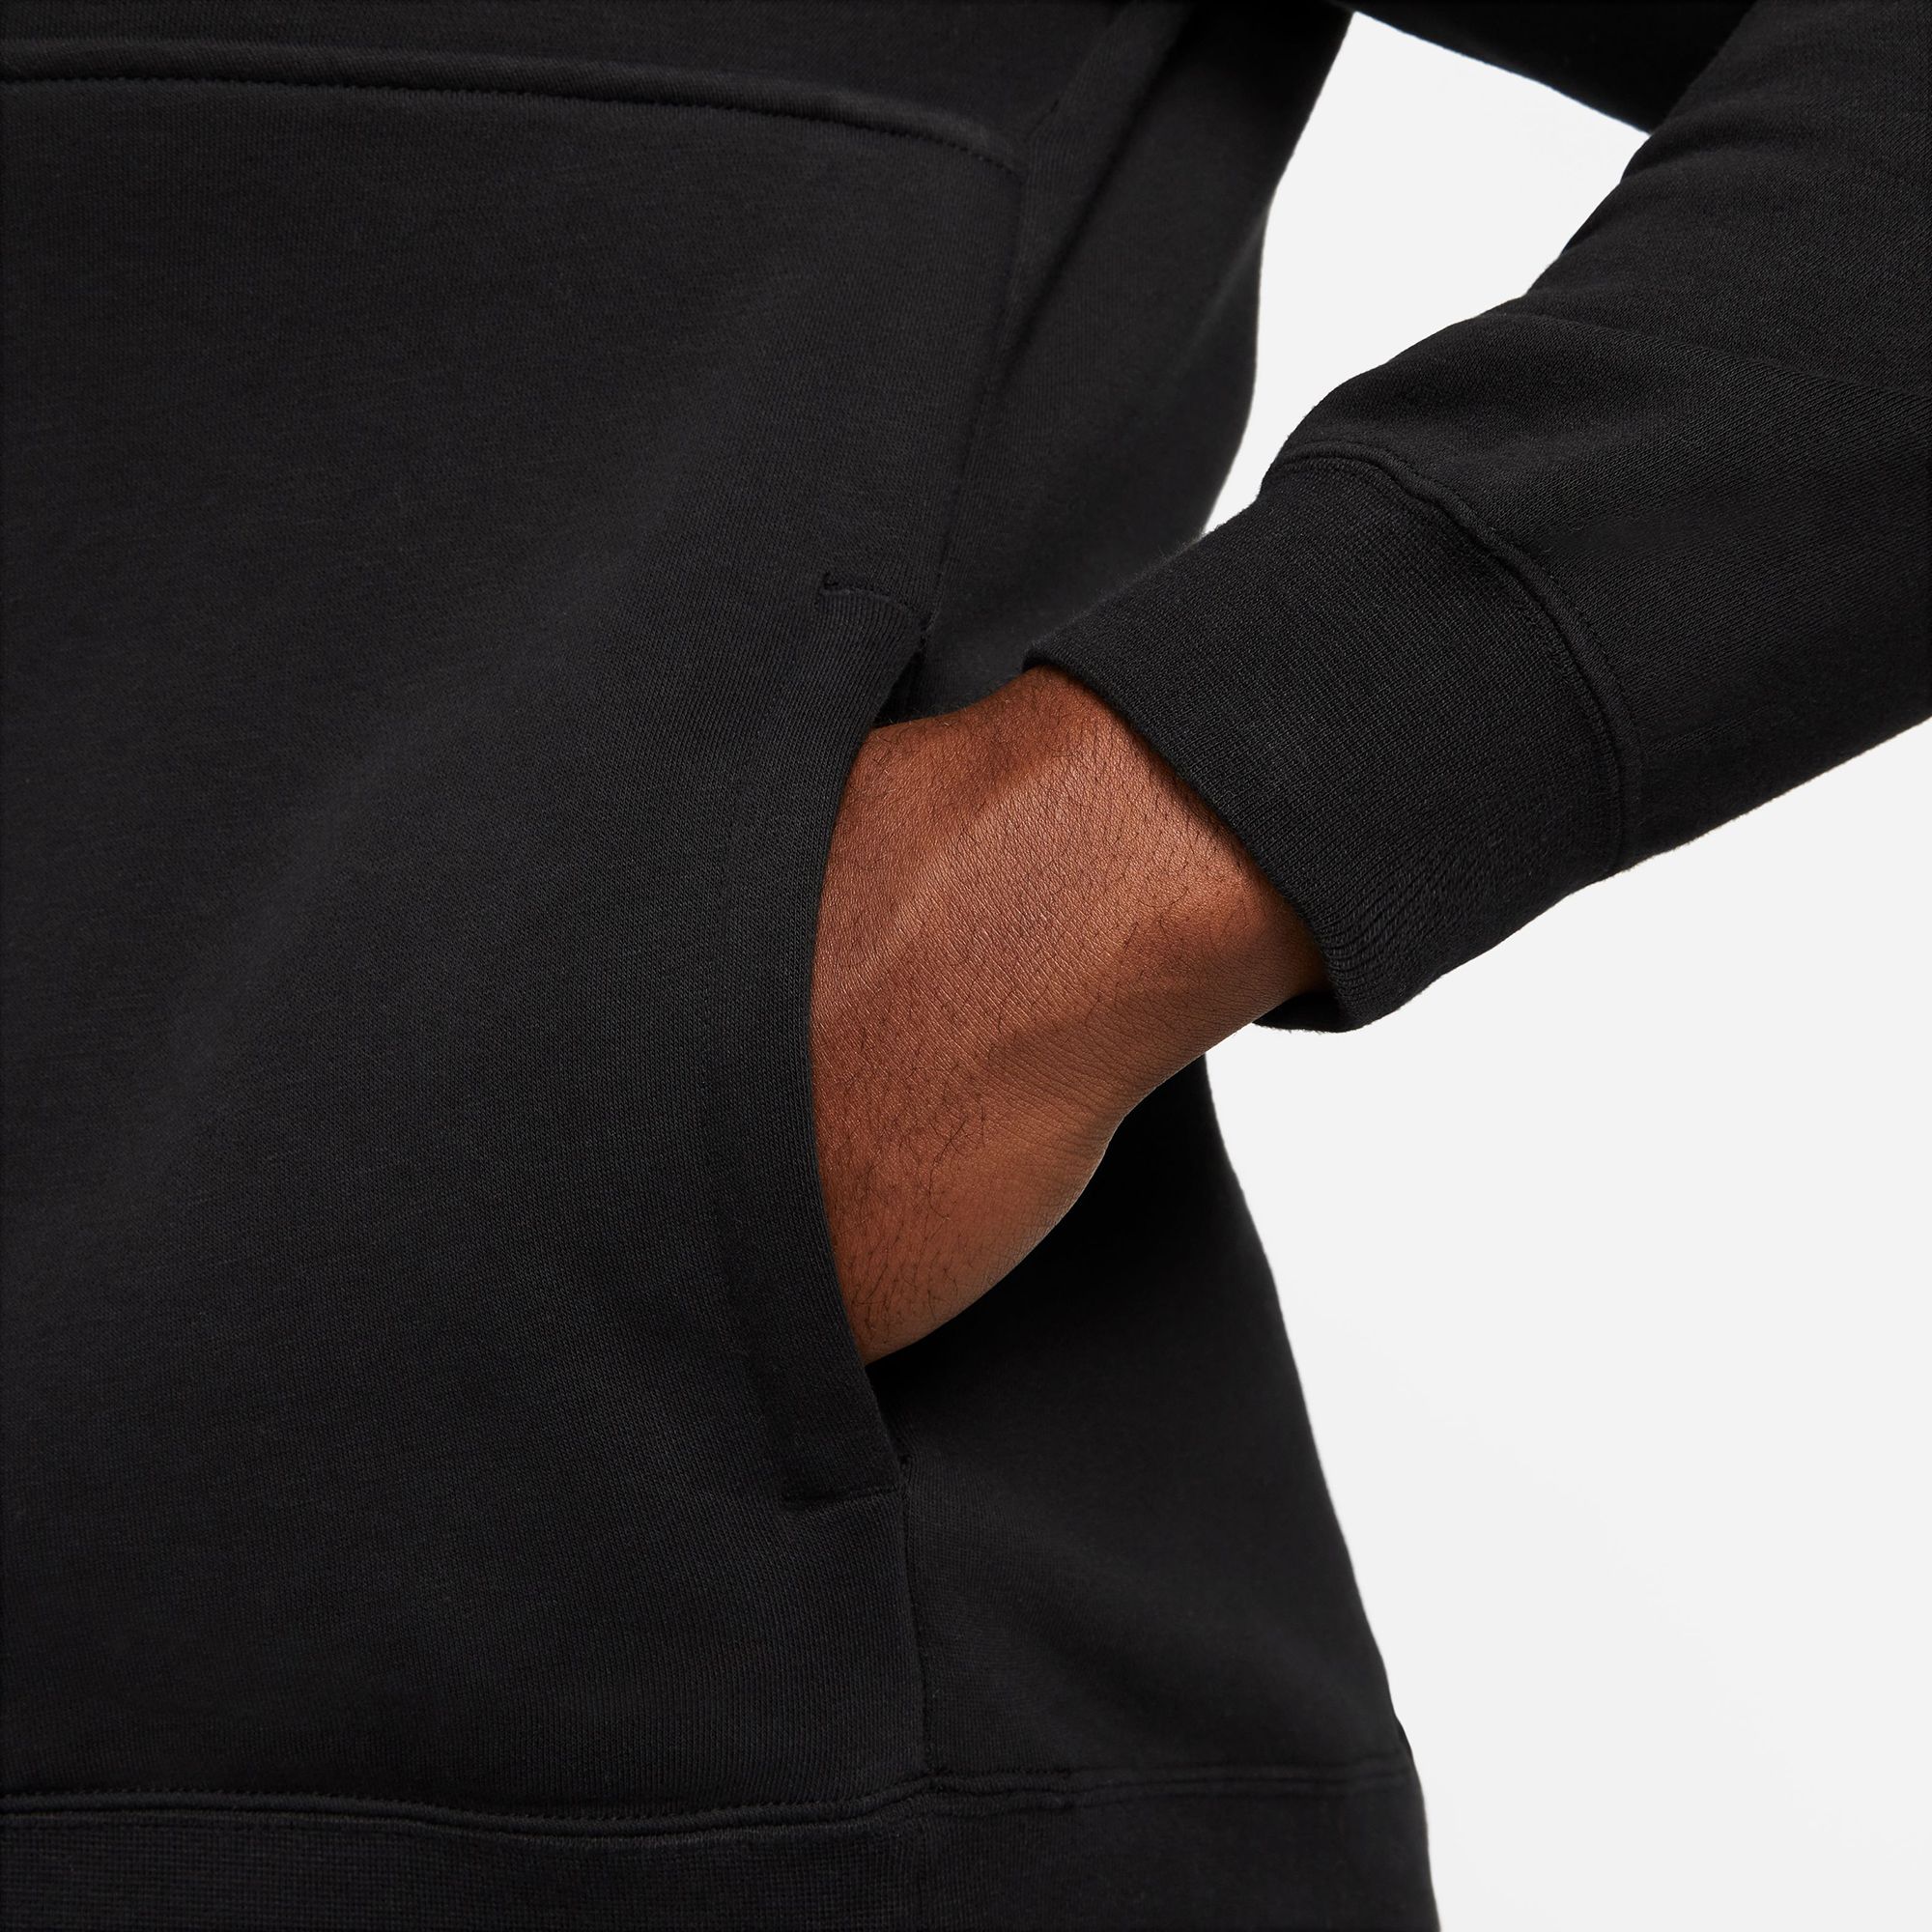 Nike Men's Sportswear Club Brushed-Back 1/2 Zip Pullover Sweatshirt